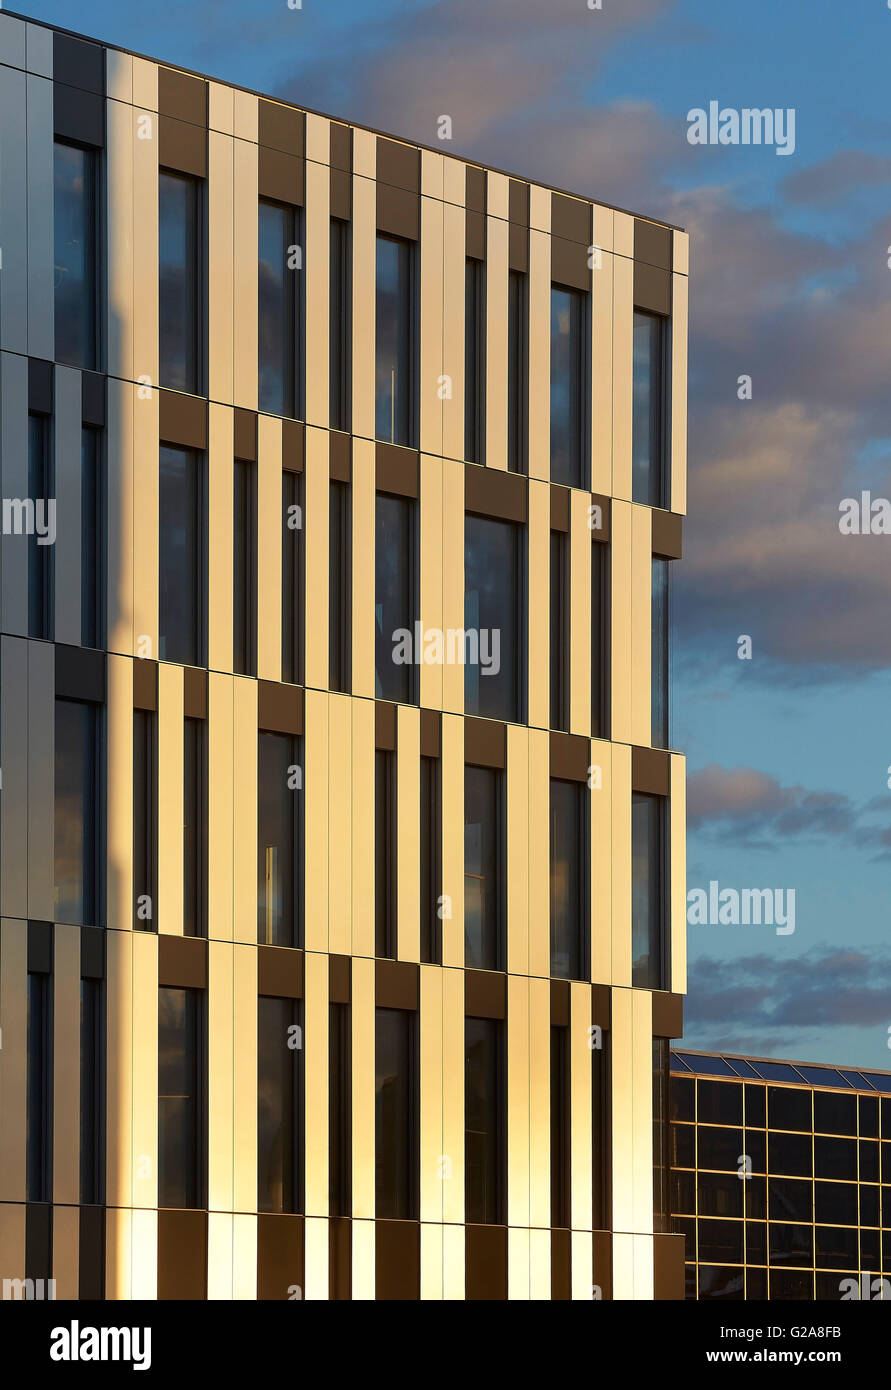 Graphic facade paneling against dusk sky. Fornebuporten, Oslo, Norway. Architect: DARK, 2015. Stock Photo